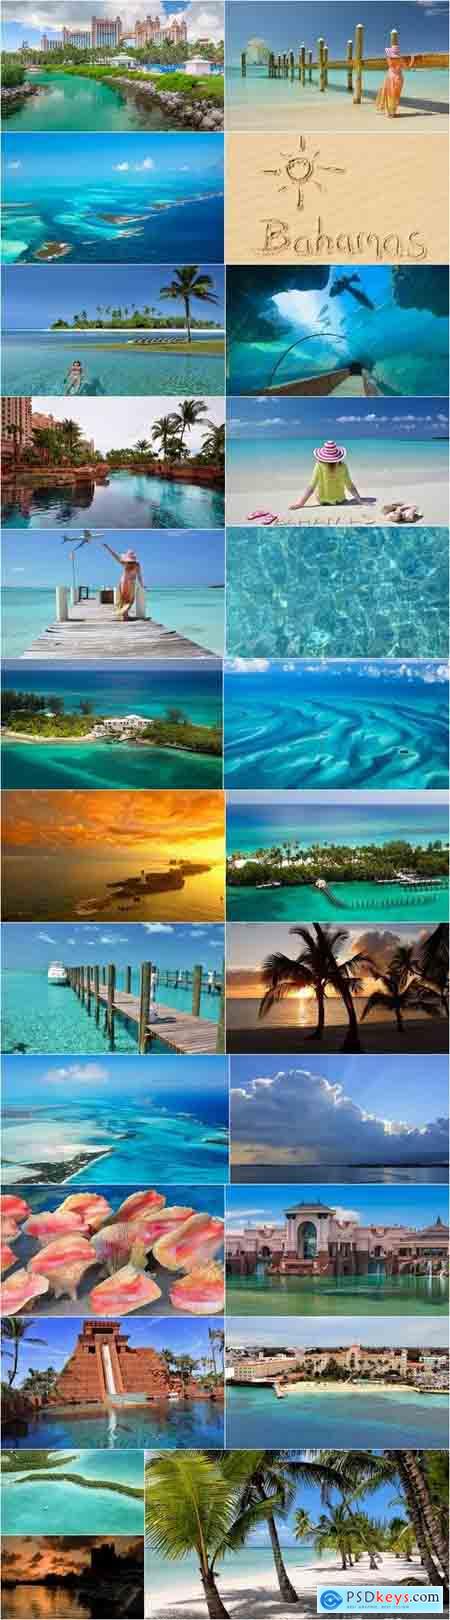 Bahamas beach resort sand sea landscape palm island 25 HQ Jpeg